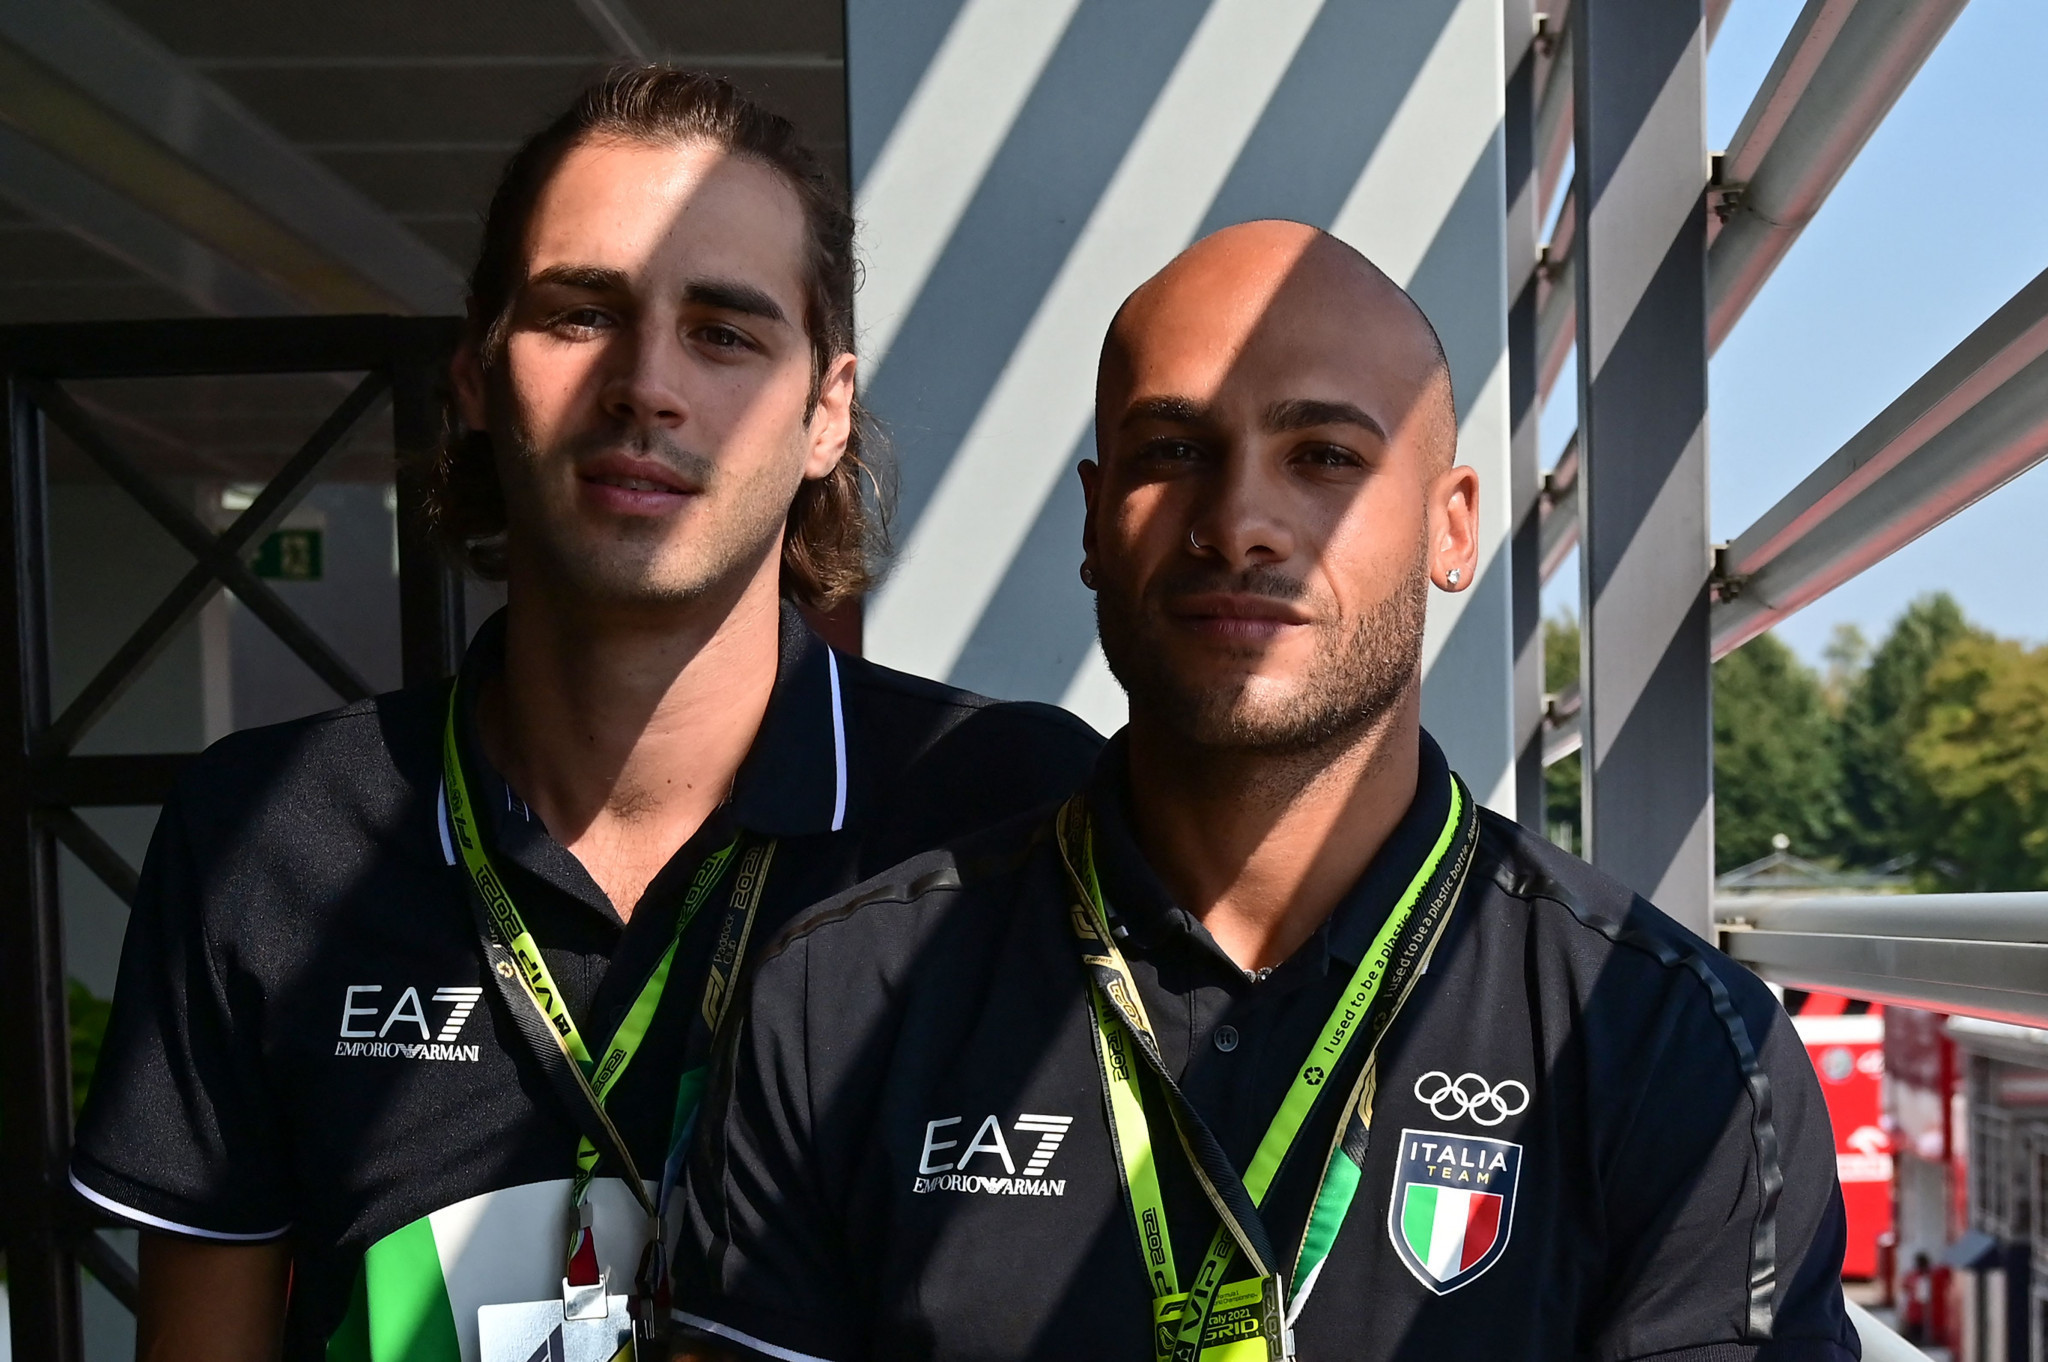 Malagò leads criticism over World Athletics award snub for Italian Olympic gold medallists